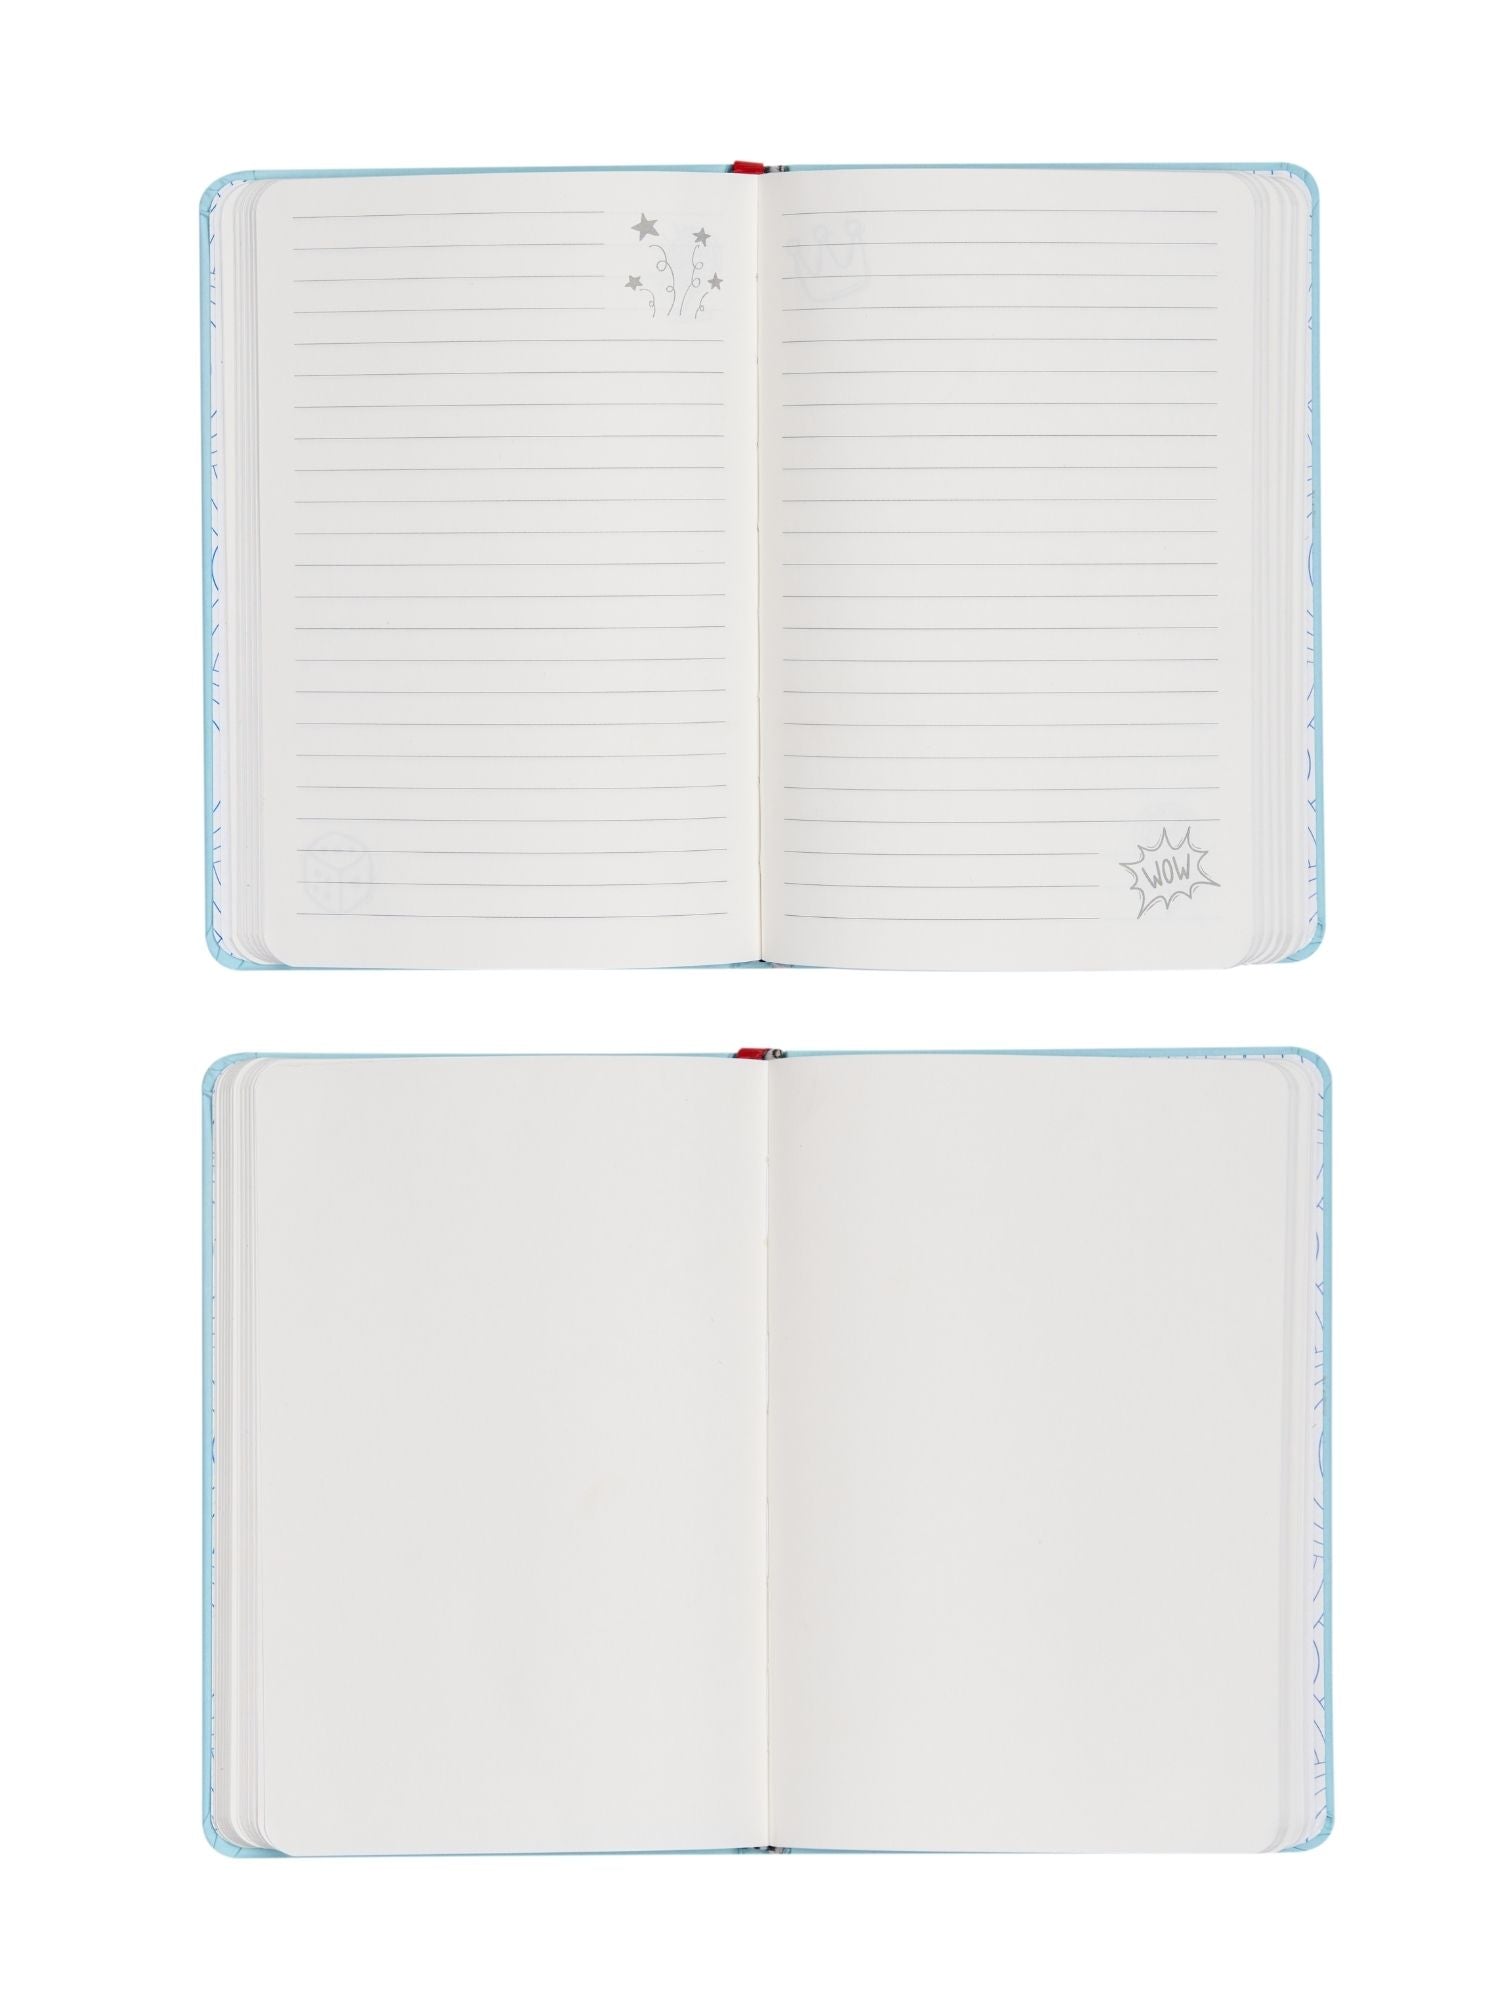 DOODLE Hearts Hardbound B6 Diary Notebook - CUTE